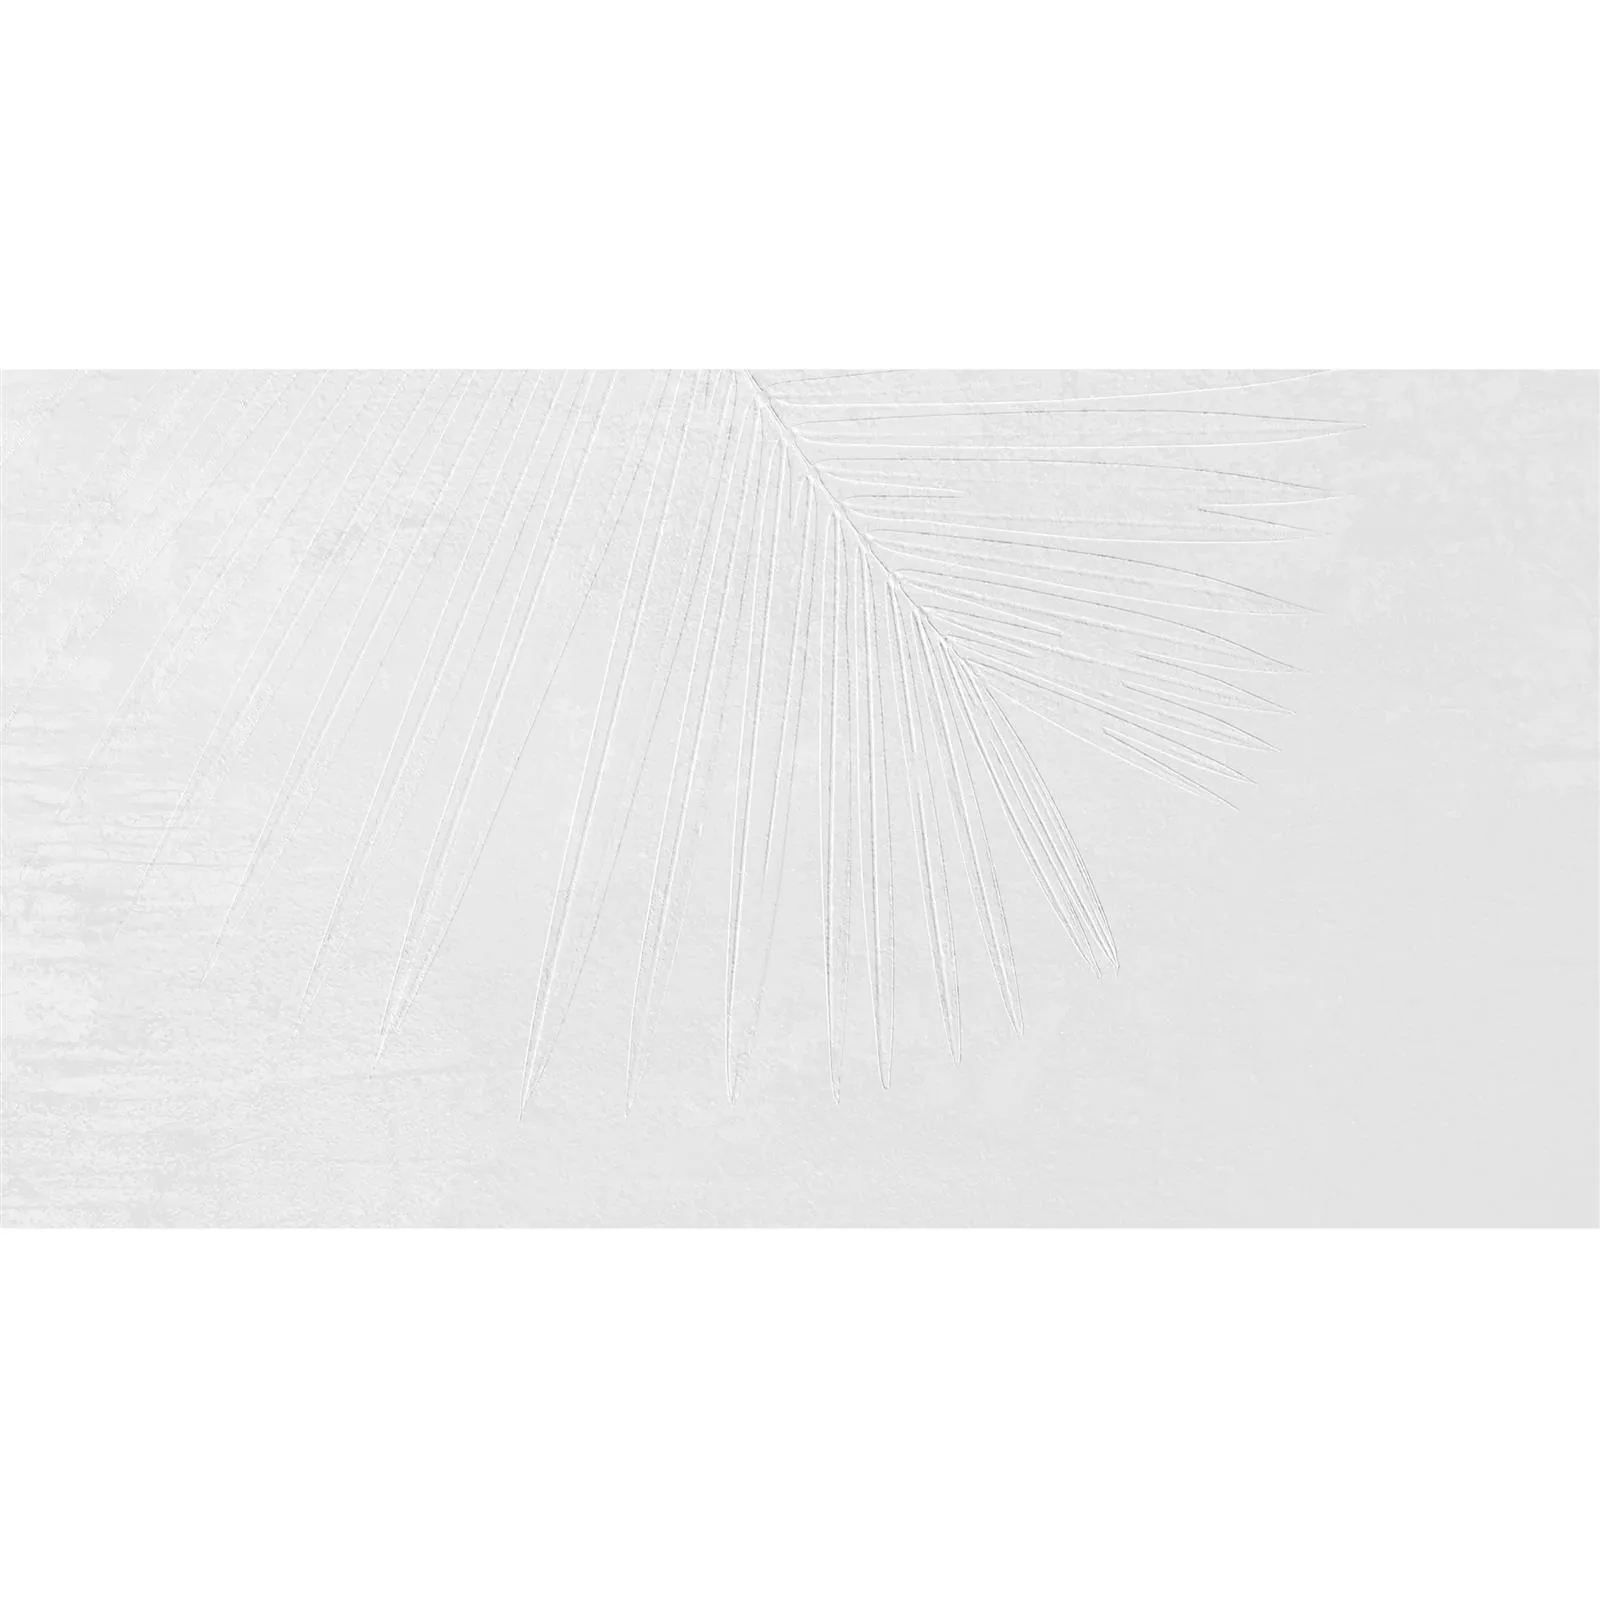 Podlahové Dlaždice Freeland Kámen Vzhled R10/B Bílá 60x60cm Dekor